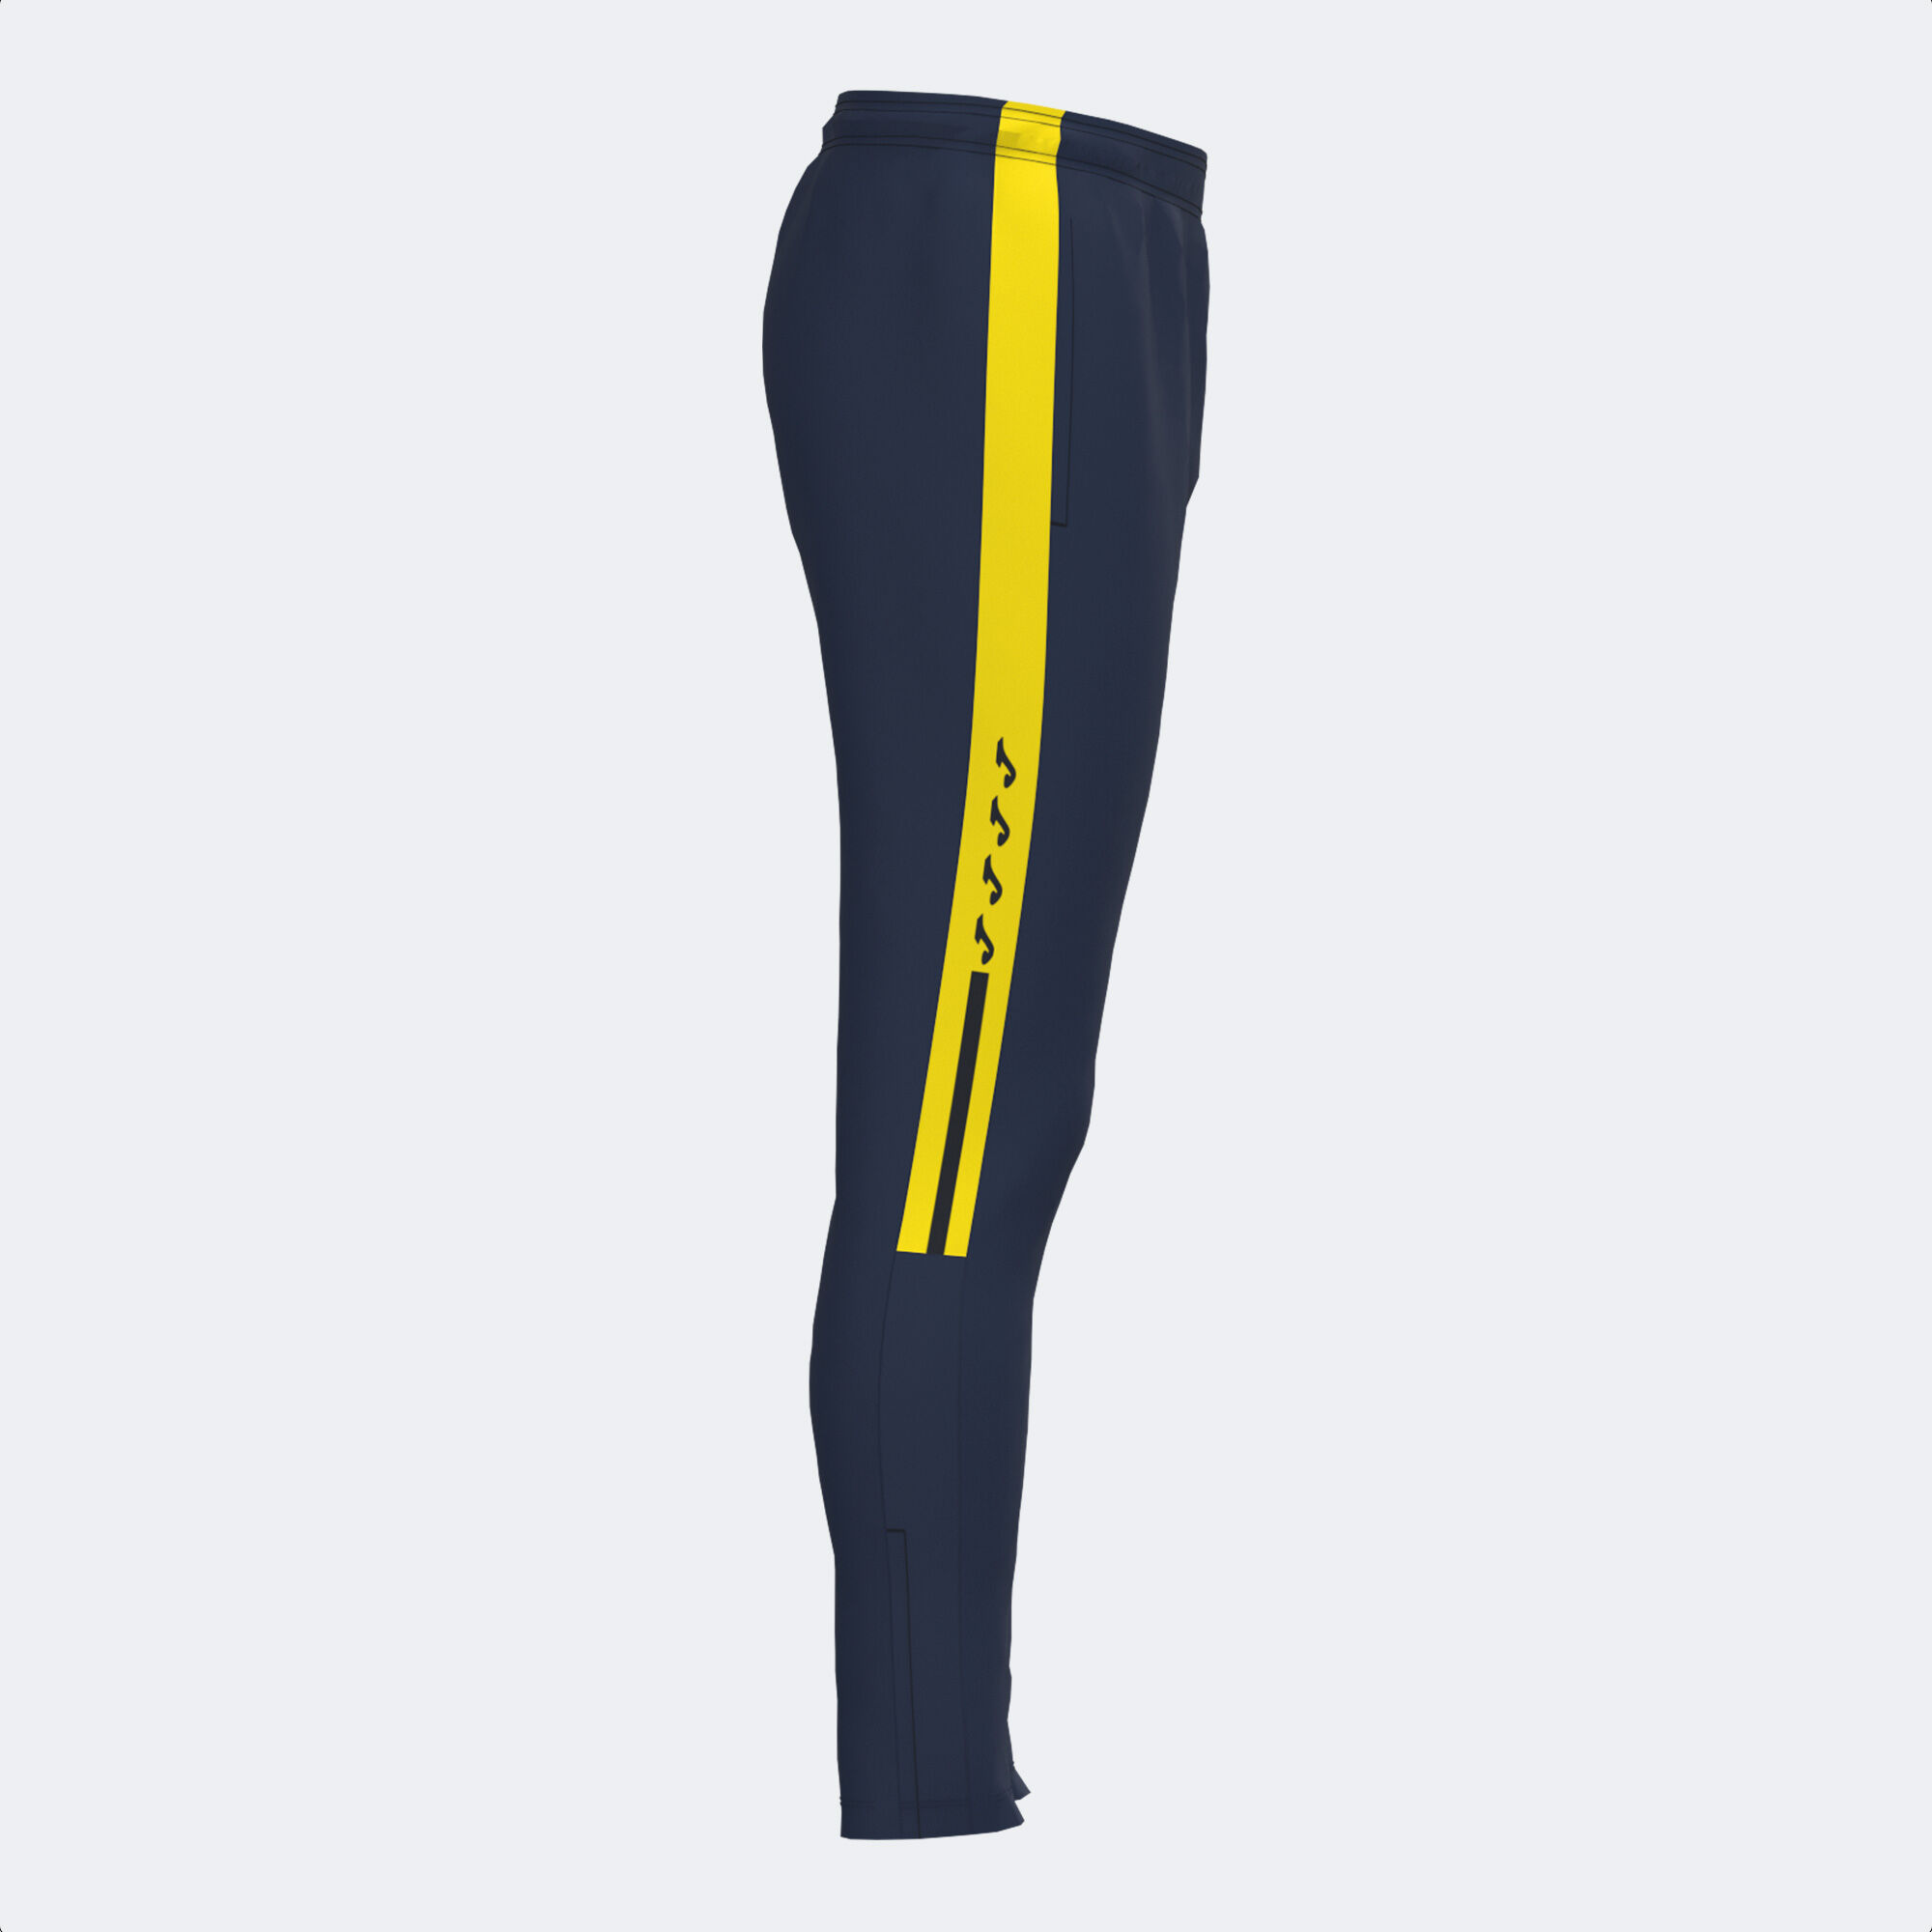 Pantaloni lungi bărbaȚi Olimpiada bleumarin galben